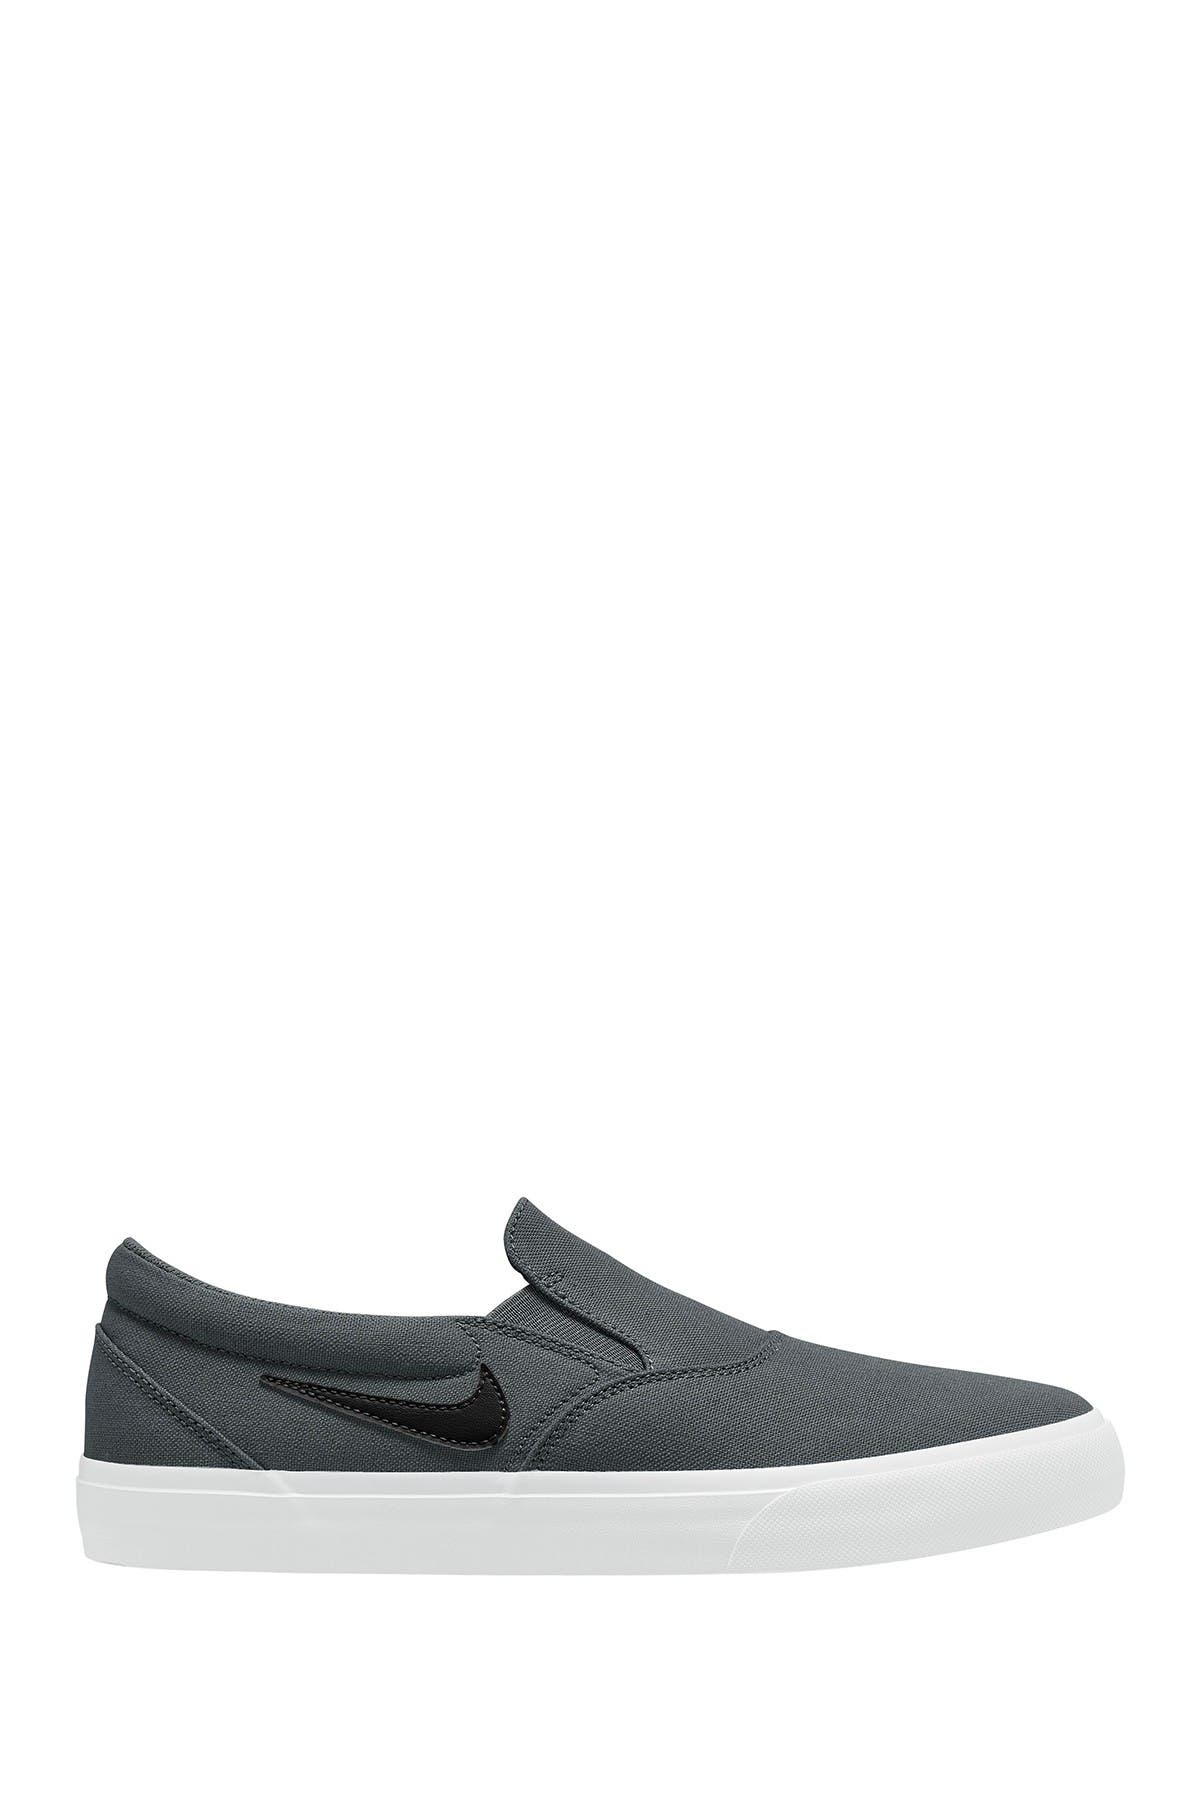 Nike Men's Slip-On Sneakers| Nordstrom 